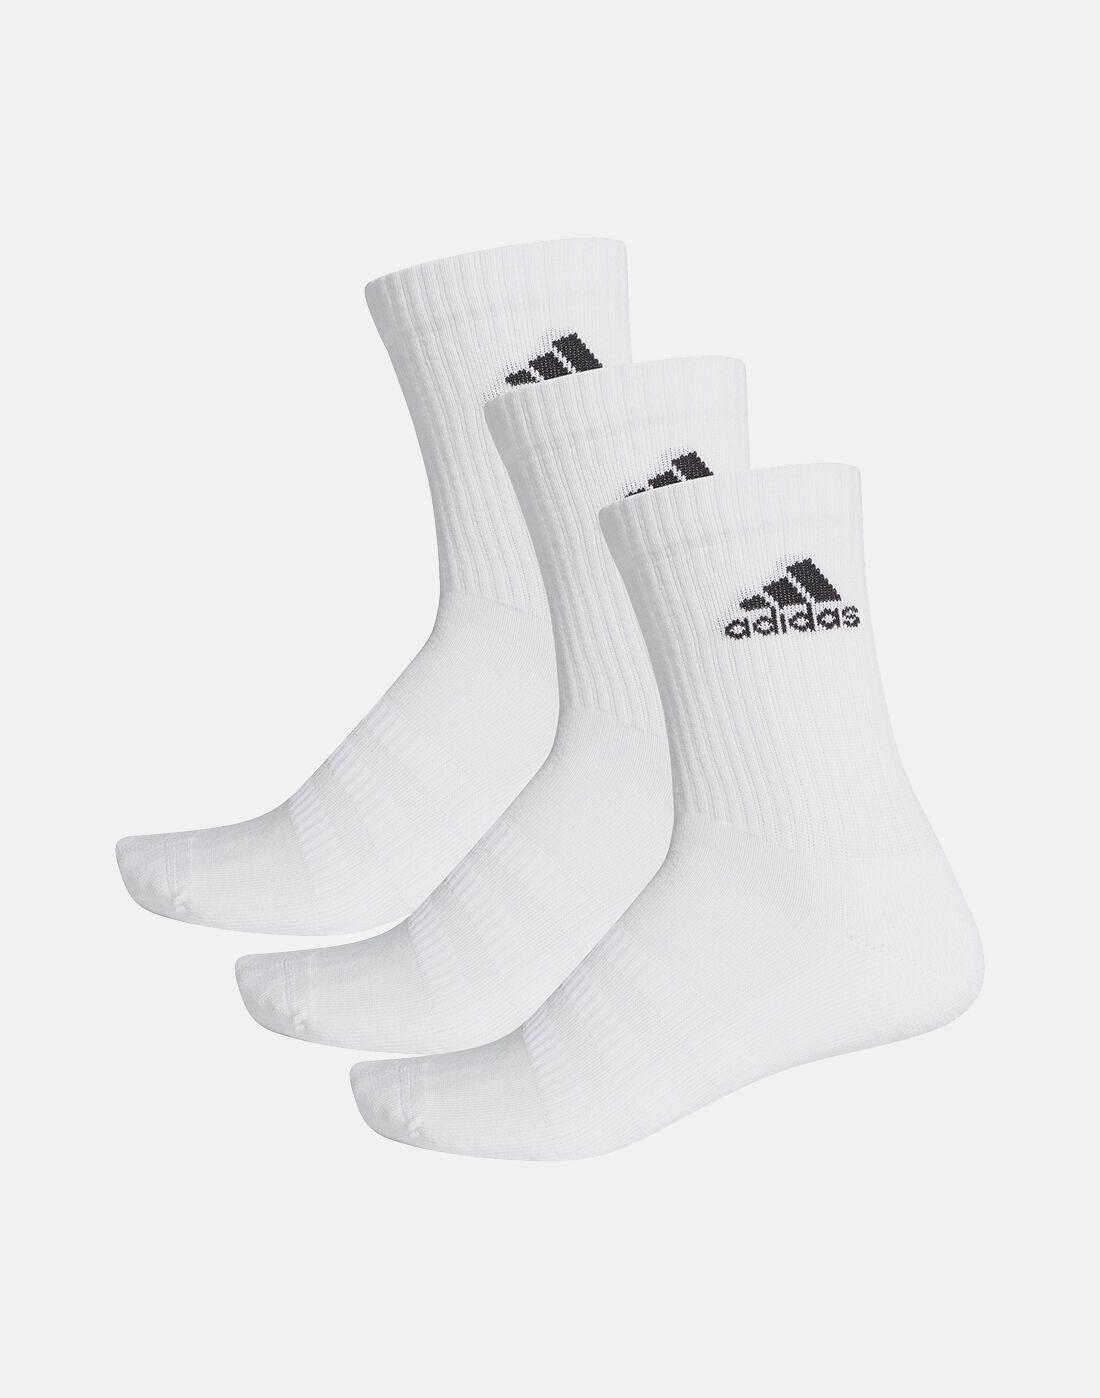 white nike socks wholesale